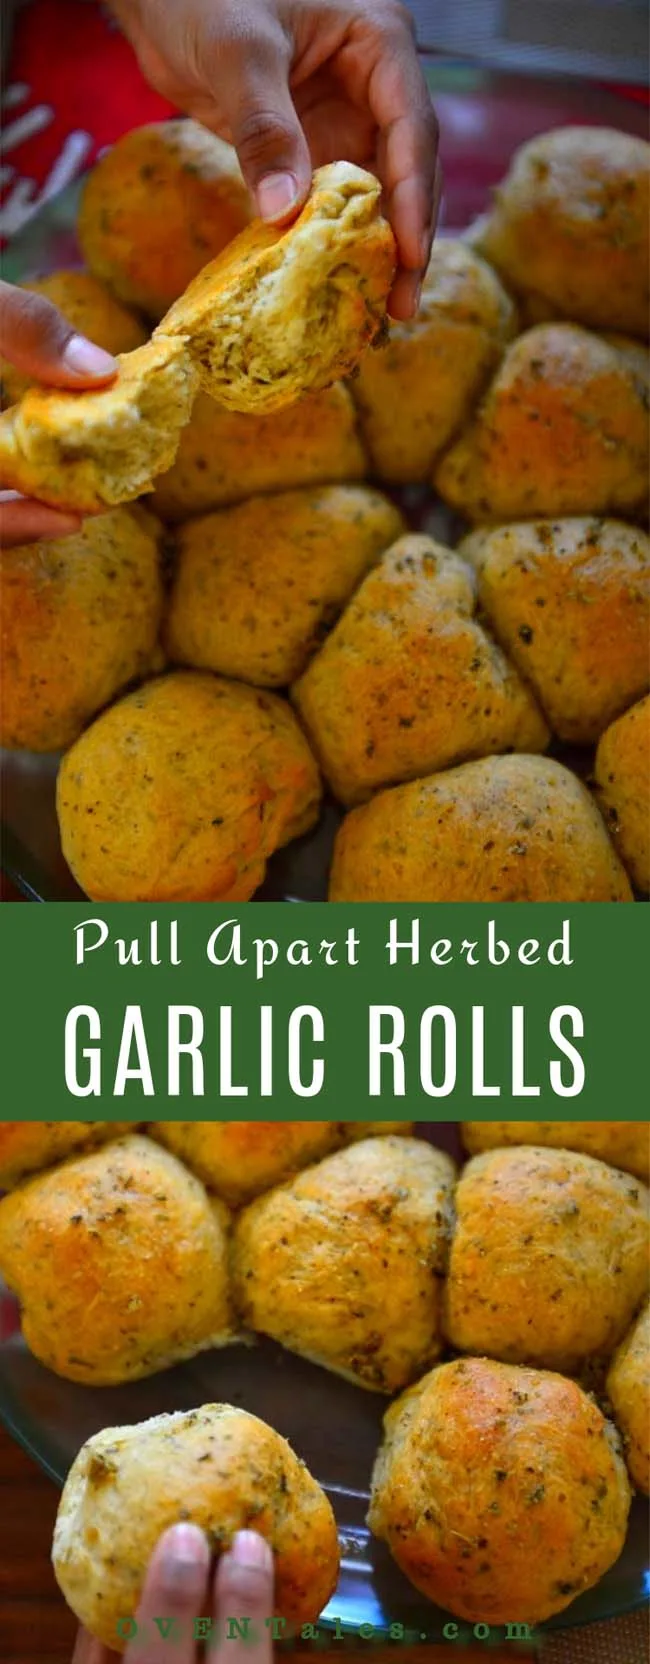 Making Pull Apart Herbed Garlic Rolls